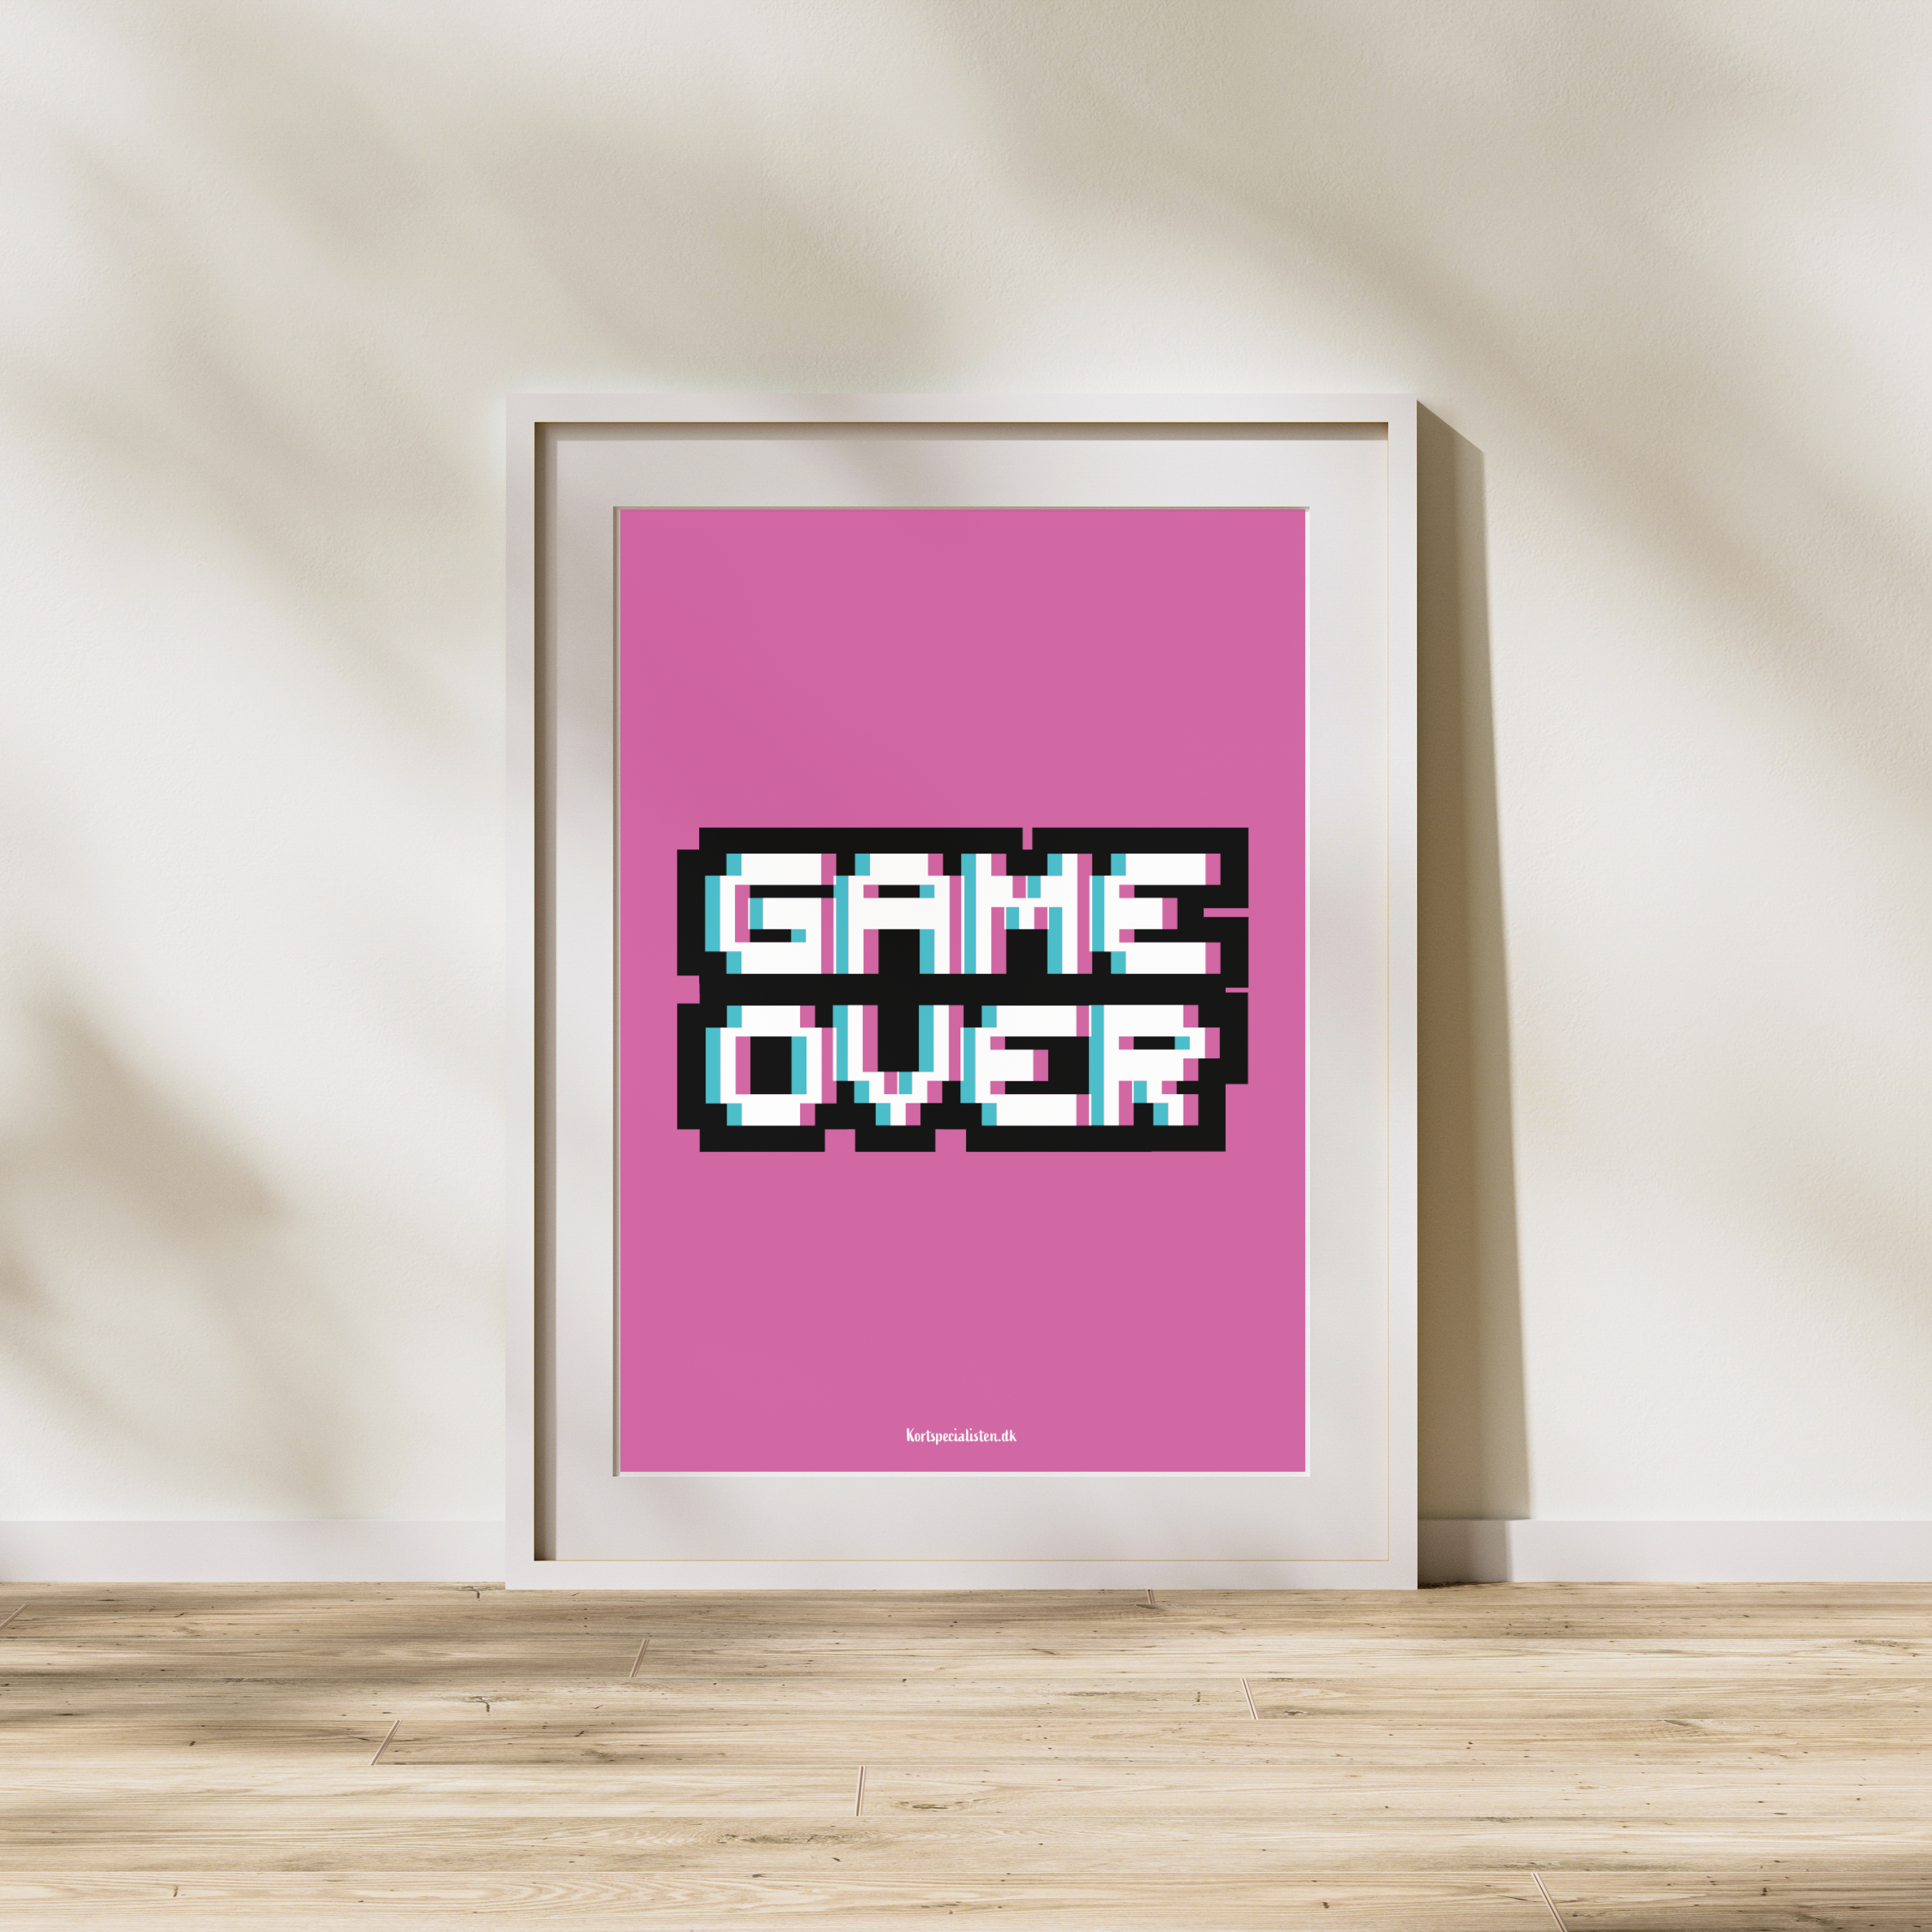 Game Over - Pixels (Plakat)